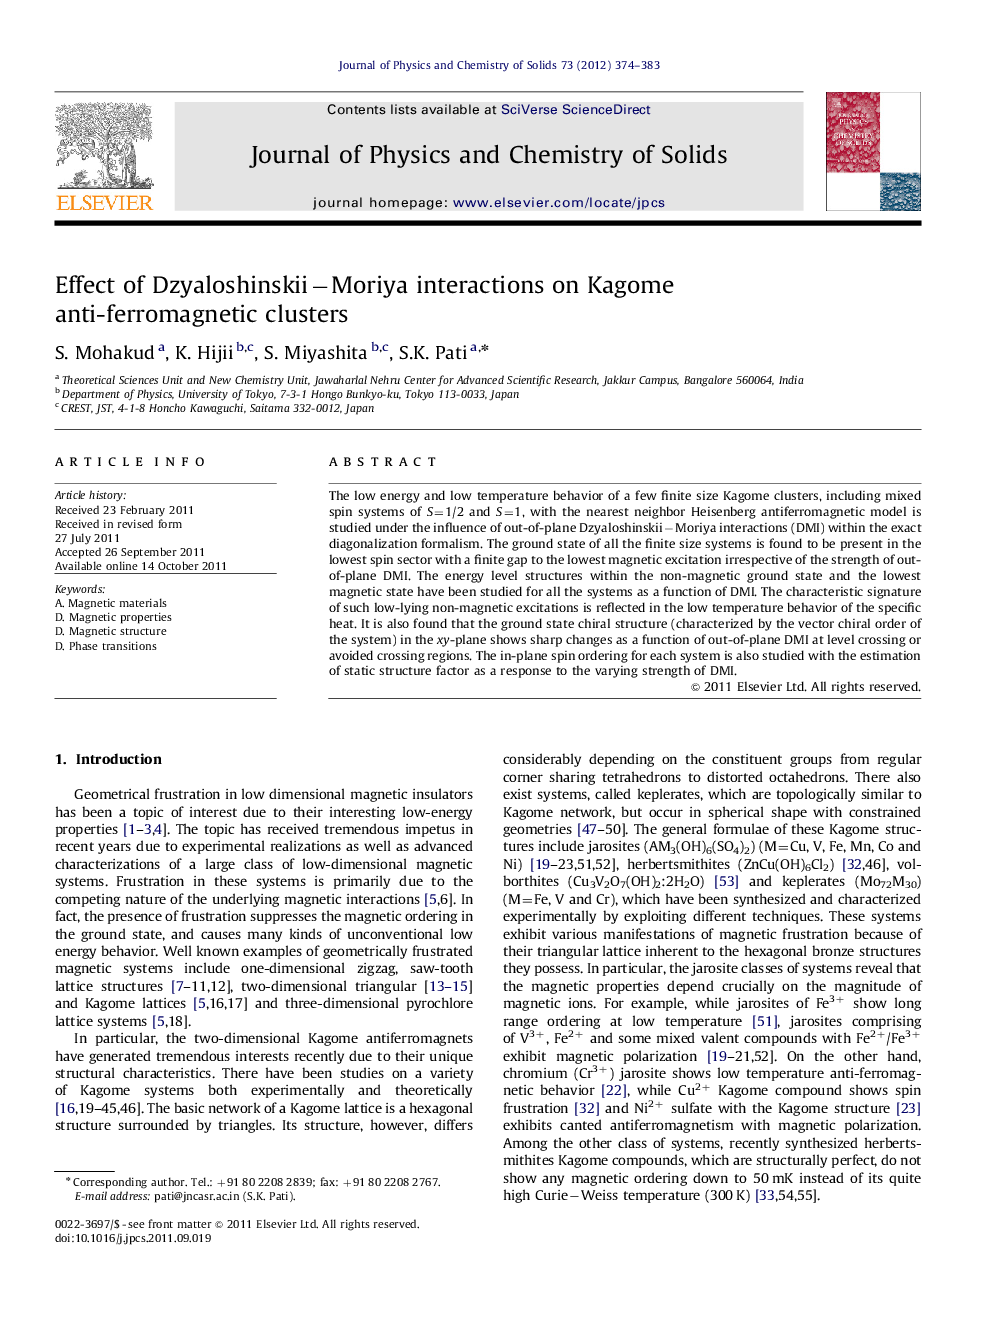 Effect of Dzyaloshinskii−Moriya interactions on Kagome anti-ferromagnetic clusters